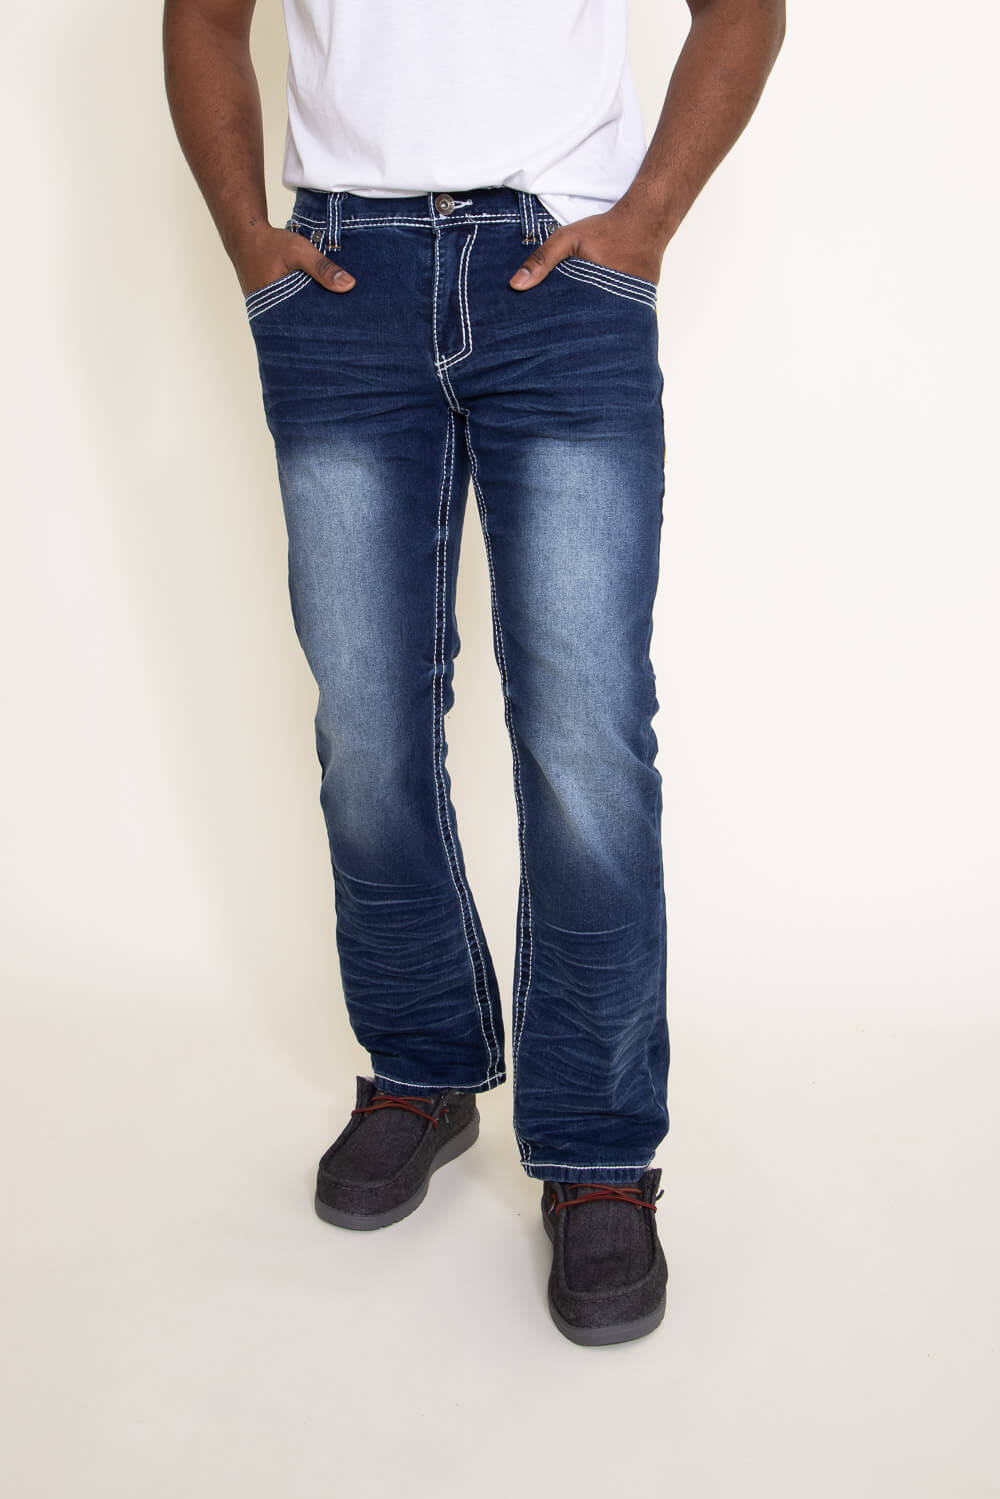 KaLI_store Jeans for Men Men's Ripped Jeans Slim Fit Skinny Stretch Comfy Denim  Jeans Pants Black,40 - Walmart.com